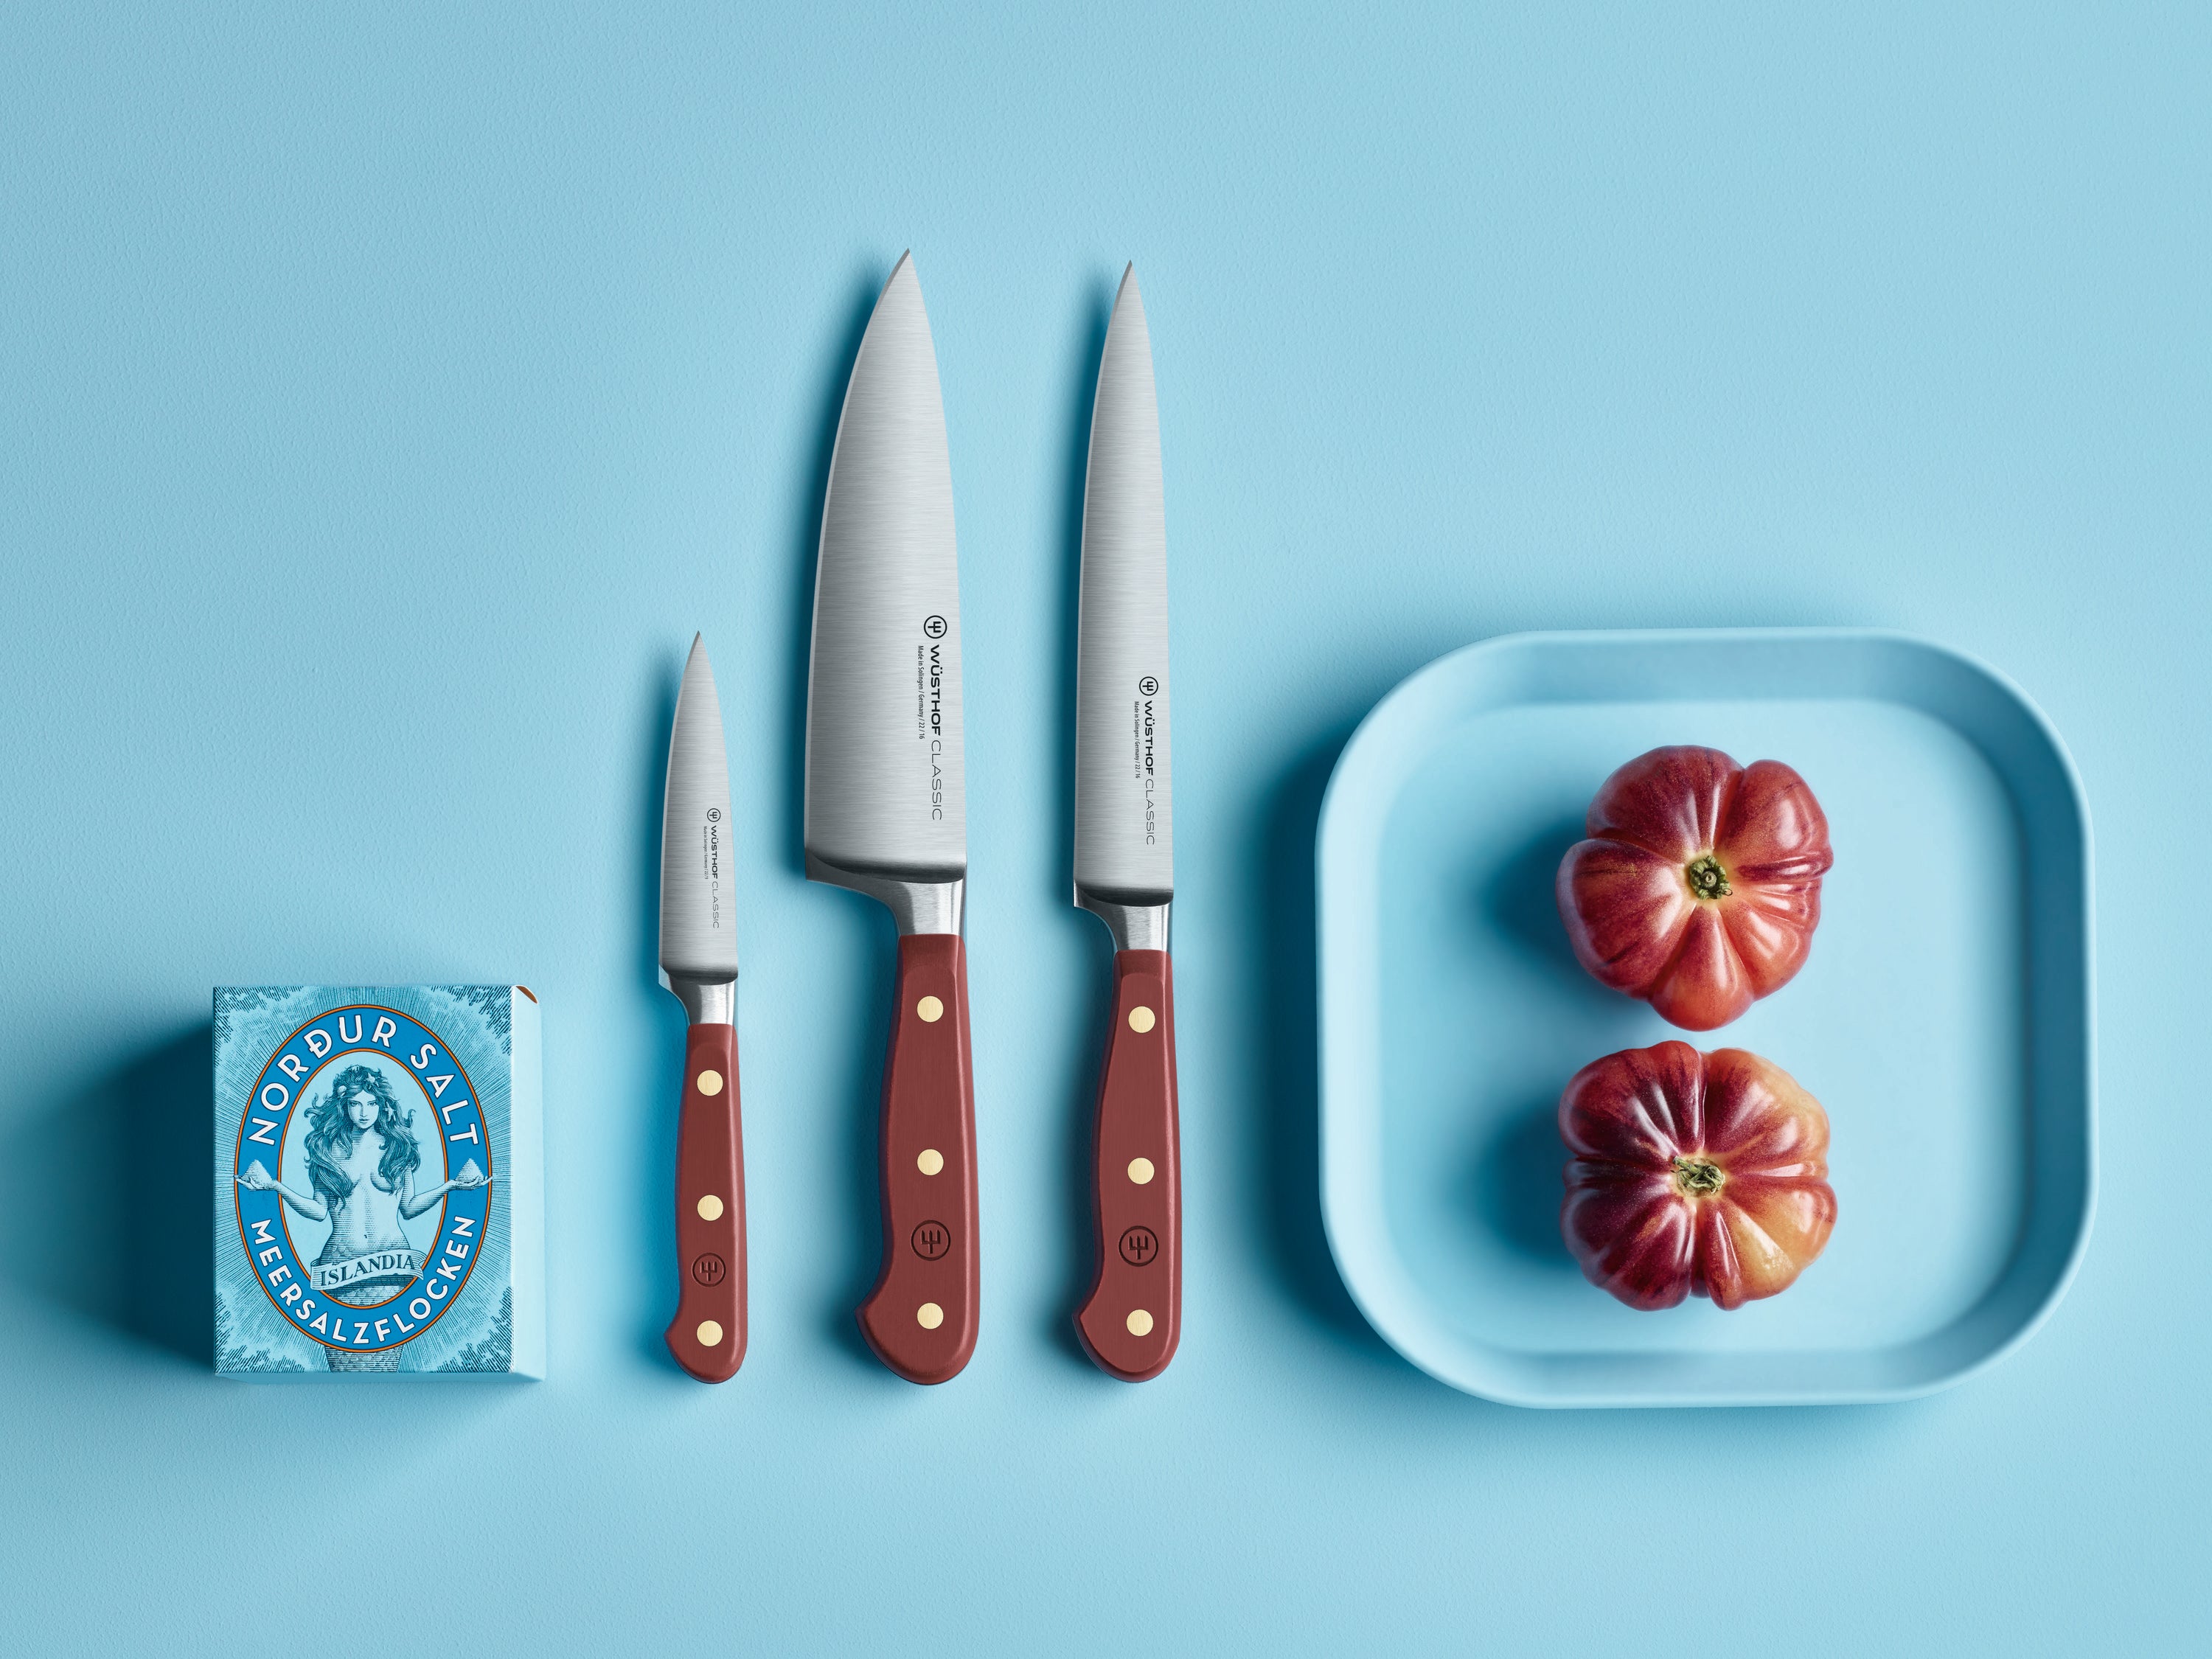 Wusthof Classic Colour Tasty Sumac Chef's Knife 16cm 1061700516W